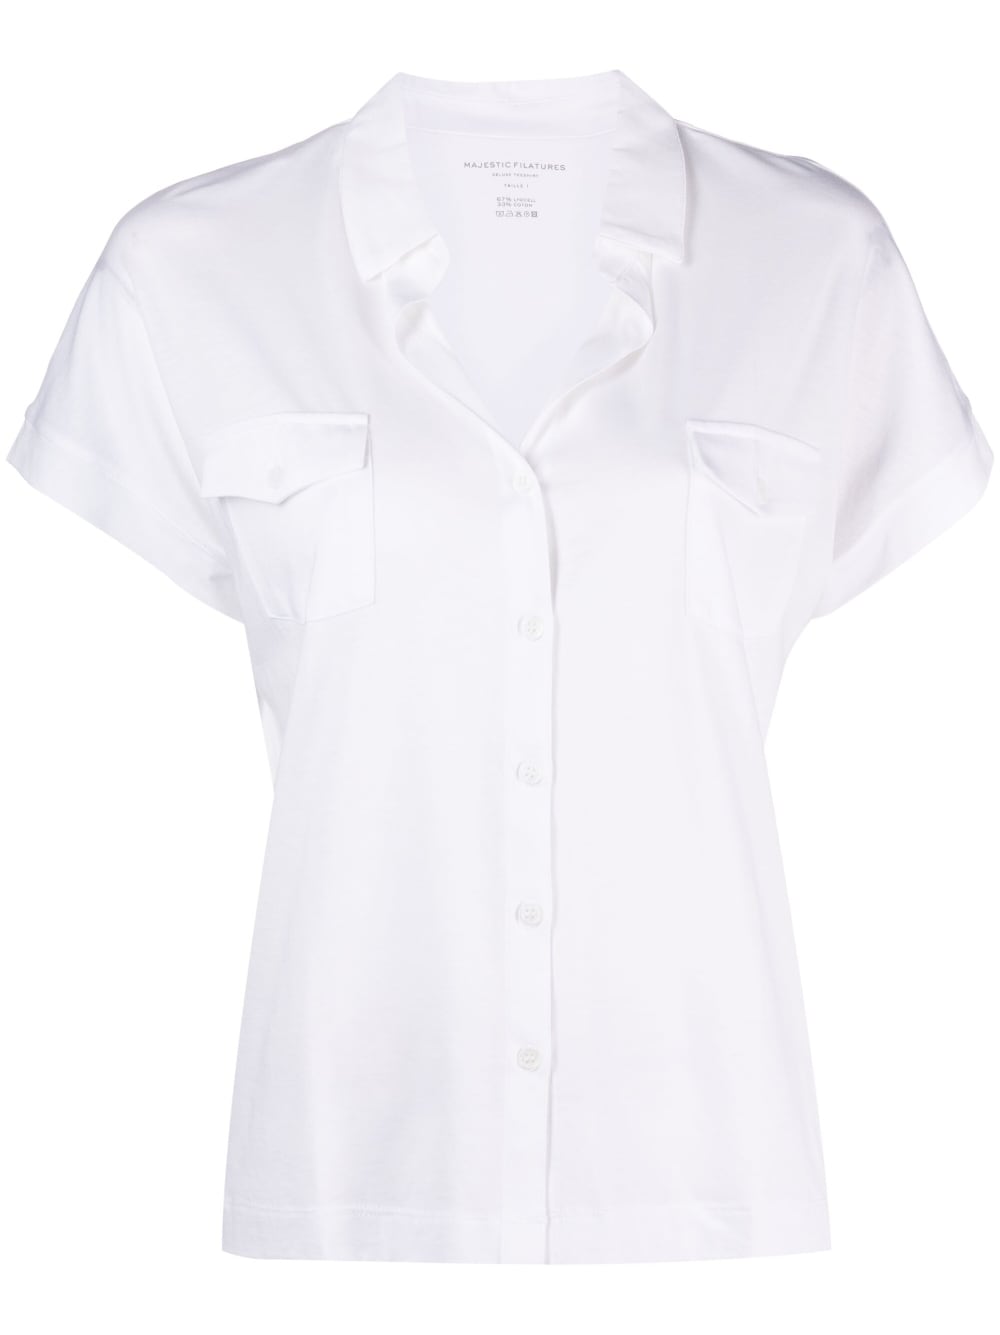 Majestic MAJESTIC- Short Sleeve Cotton Blend Shirt